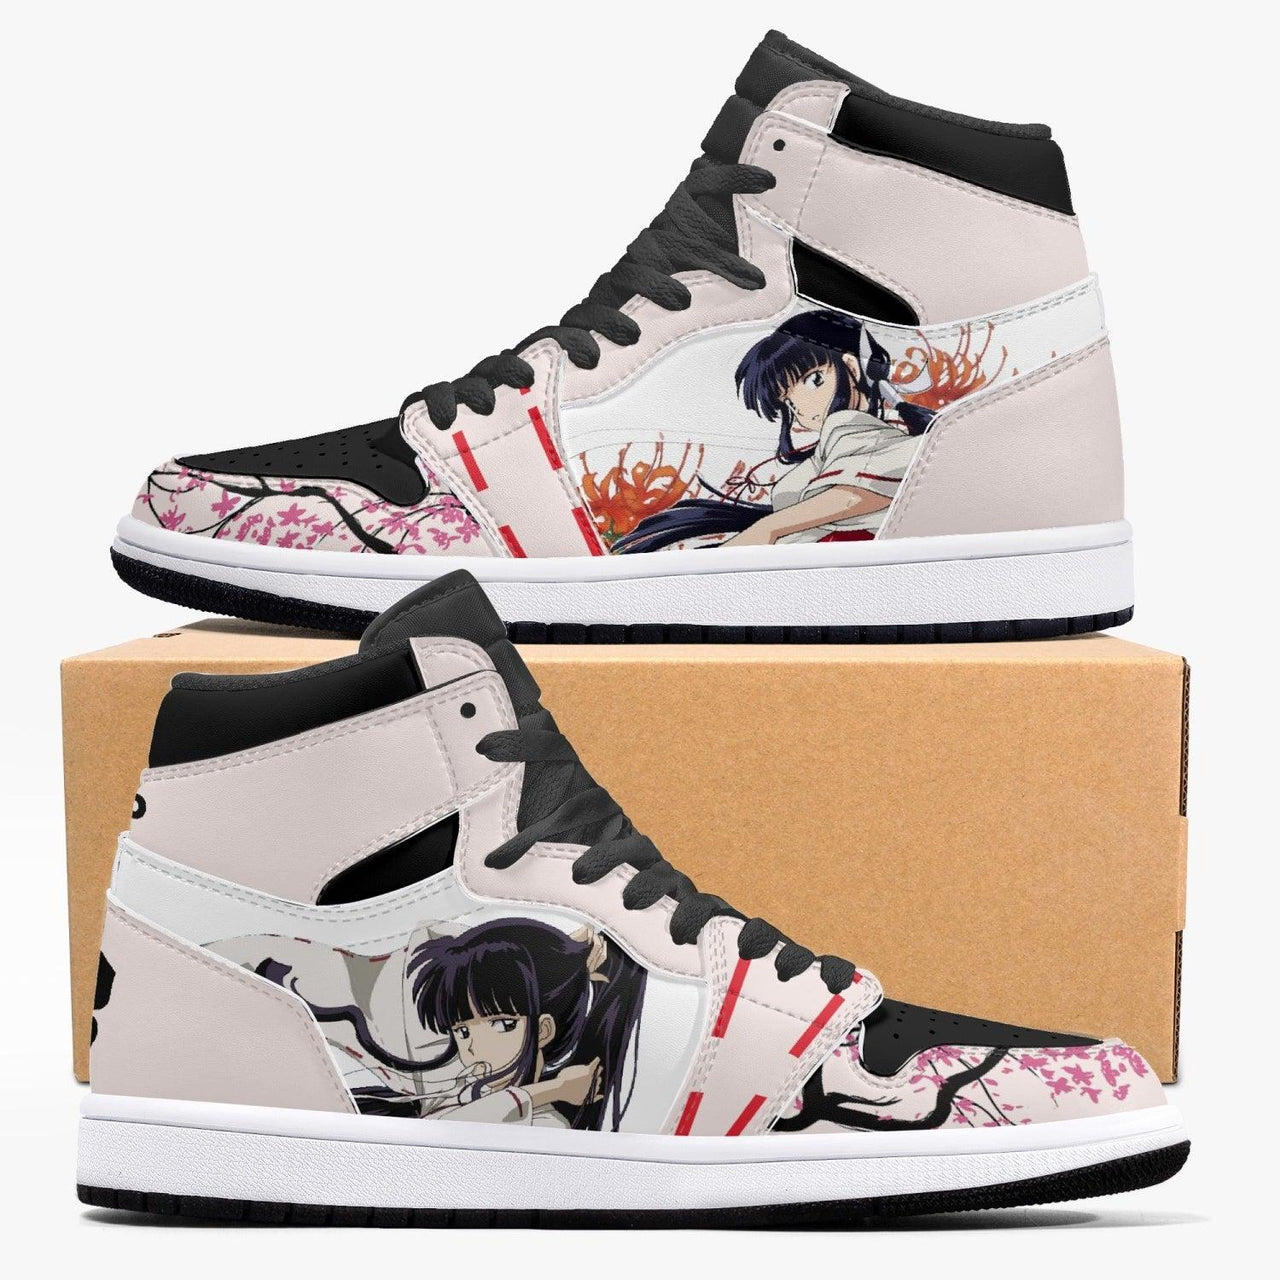 Imagens de Animes on Twitter  Roupas naruto Customização de sapatos  Costumização de sapatos